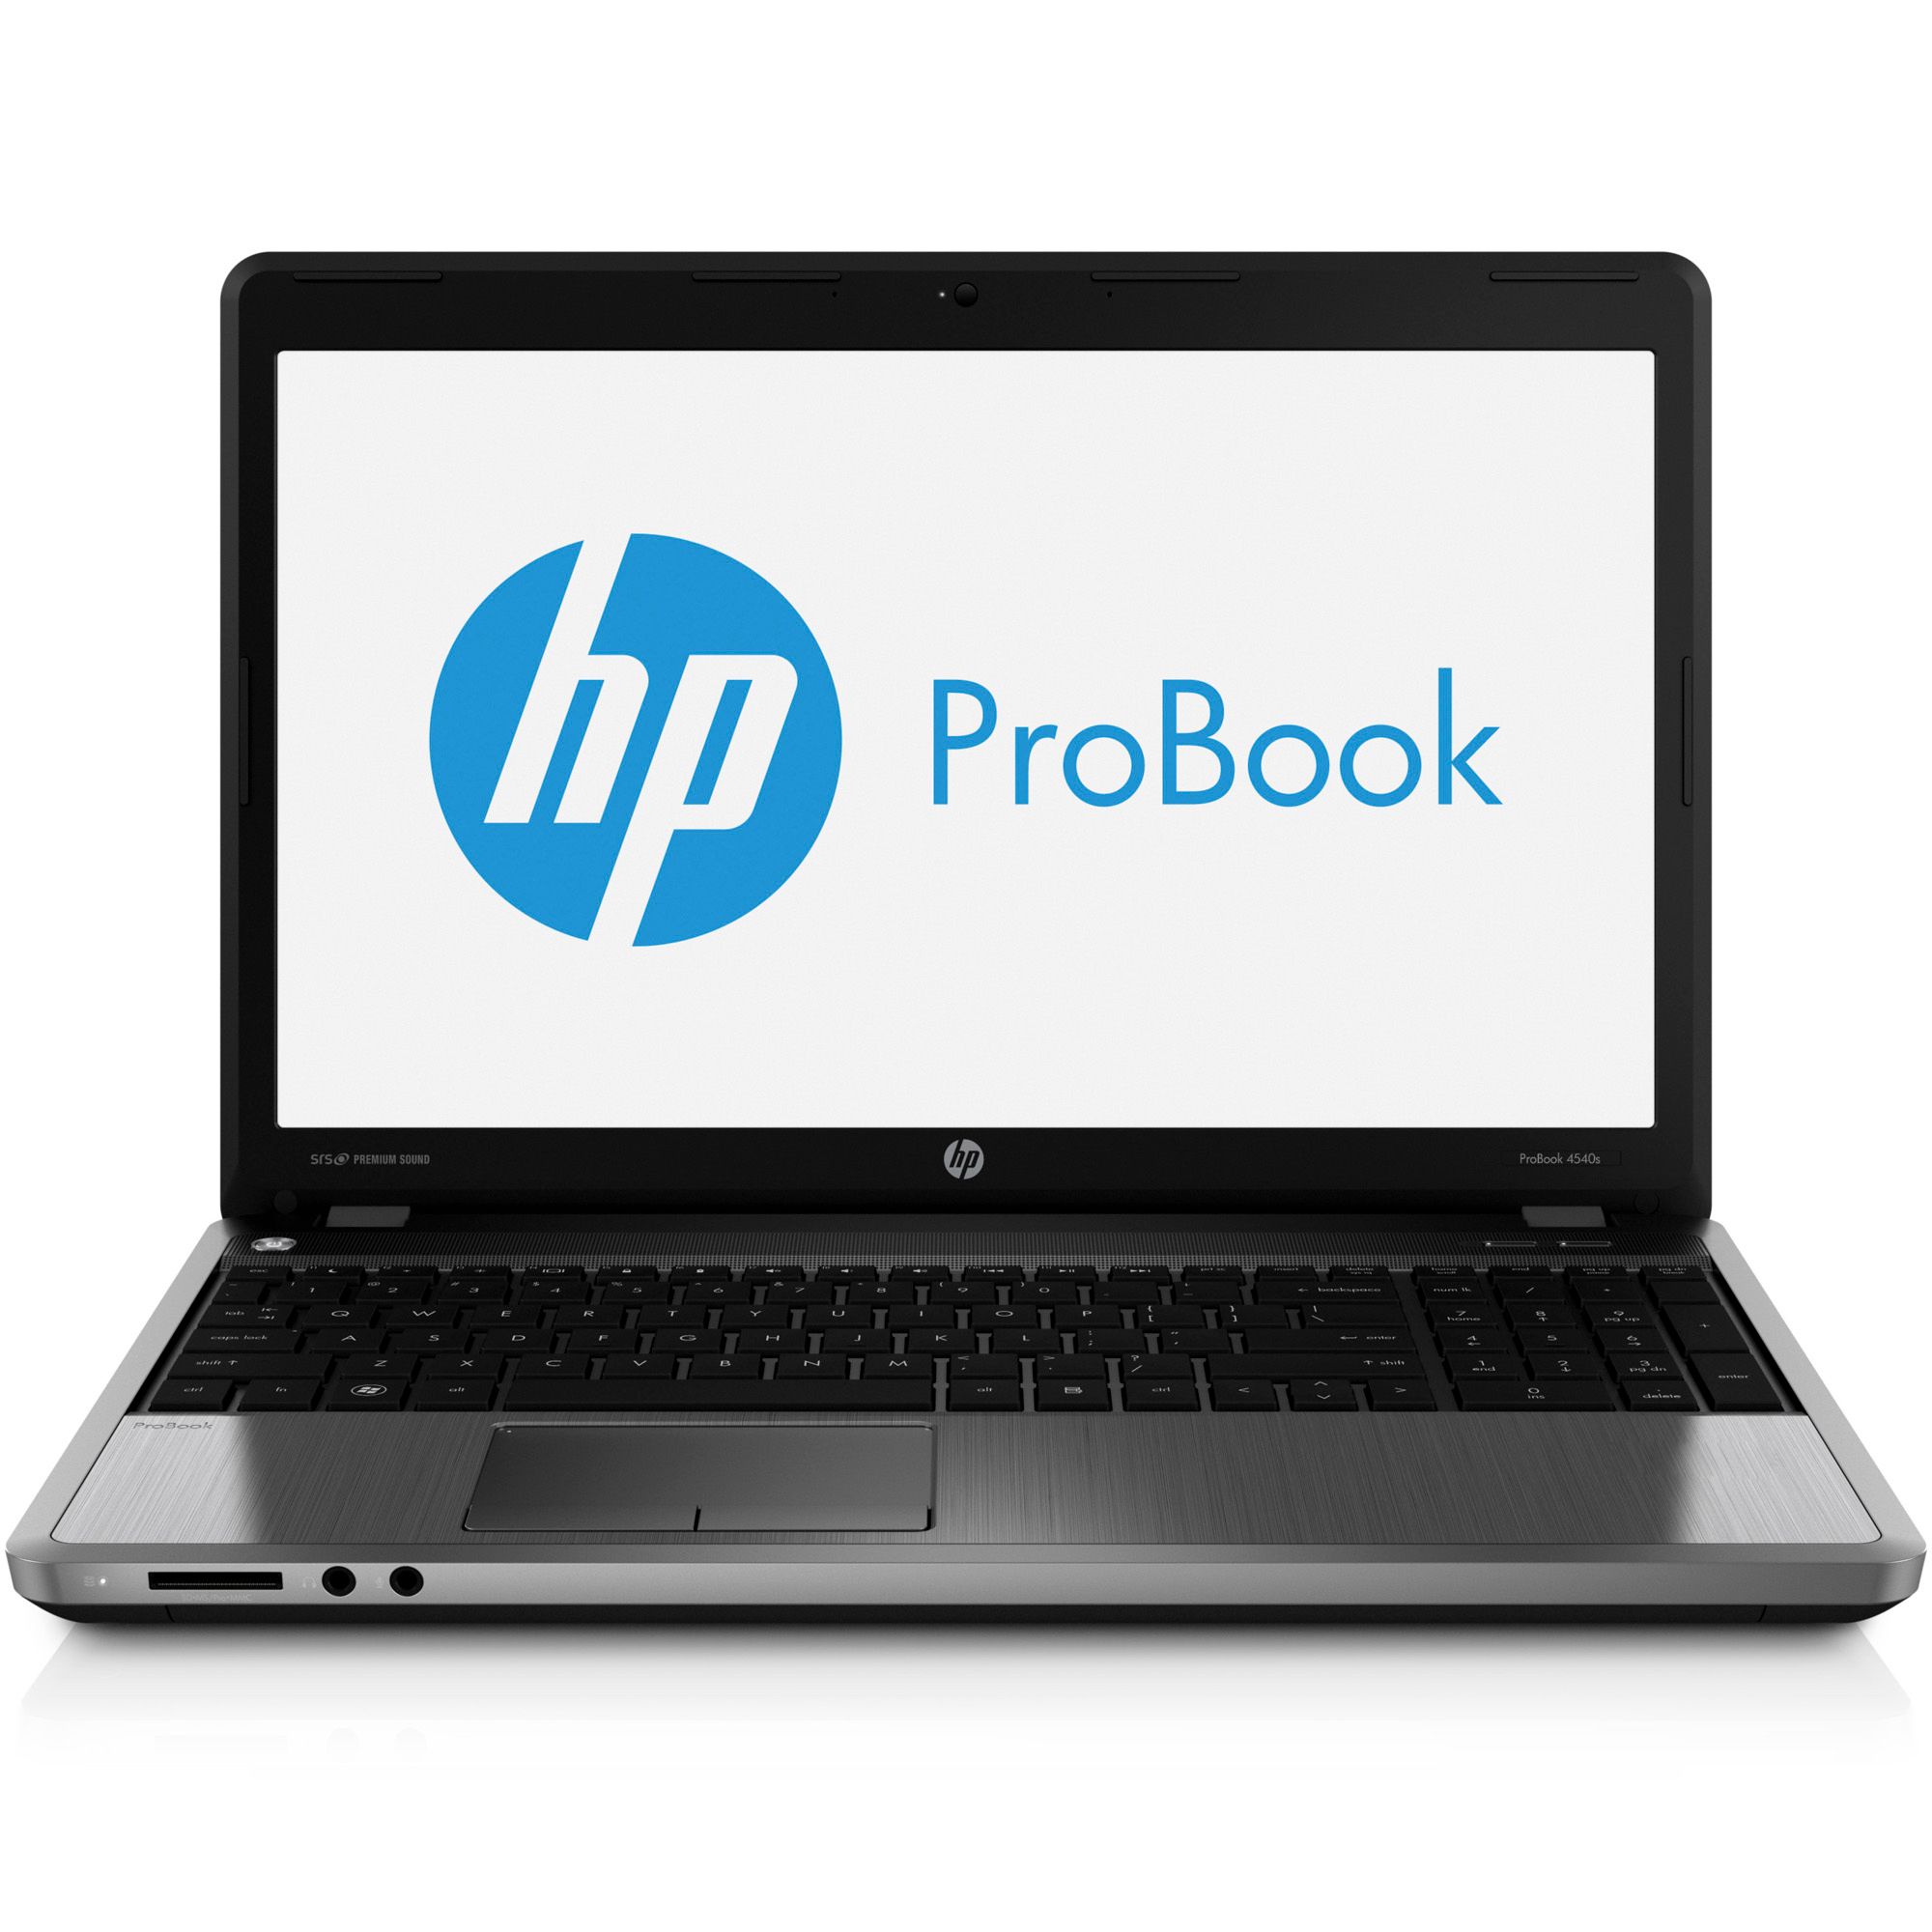 Laptop HP ProBook 4540s, Intel Core i3-3110M 2.40GHz, 4GB DDR3, 320GB SATA, DVD-RW, 15.6 Inch